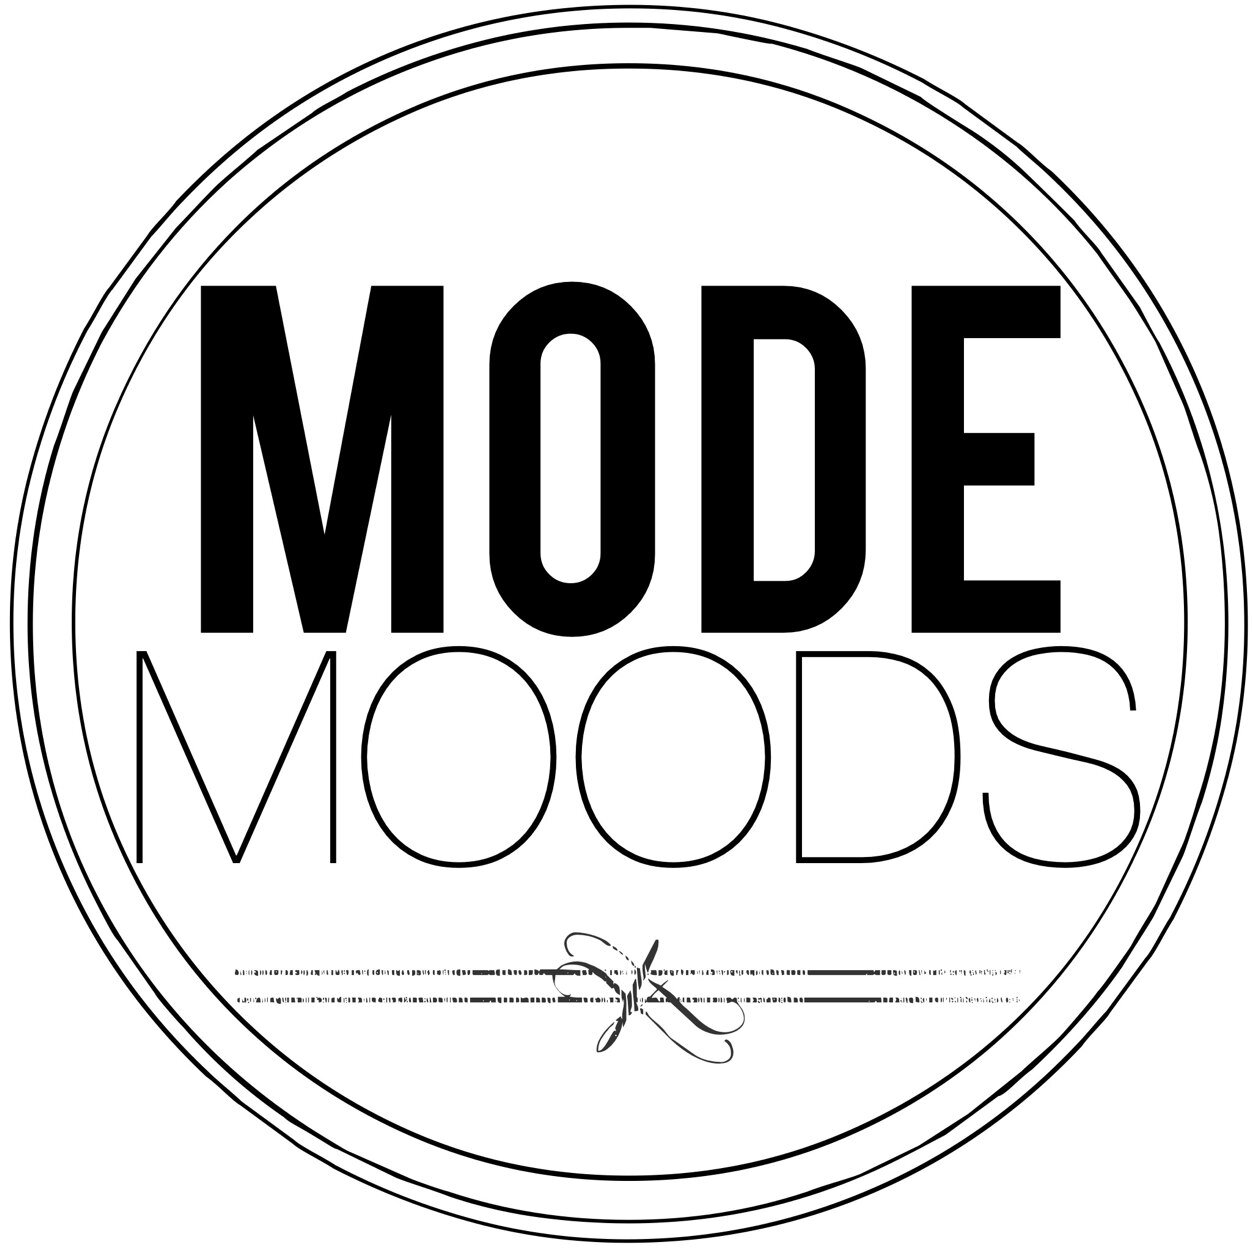 In welke #mode mood ben jij vandaag? Volg ons op twitter en http://t.co/RFNdbcbVjv
Amsterdam